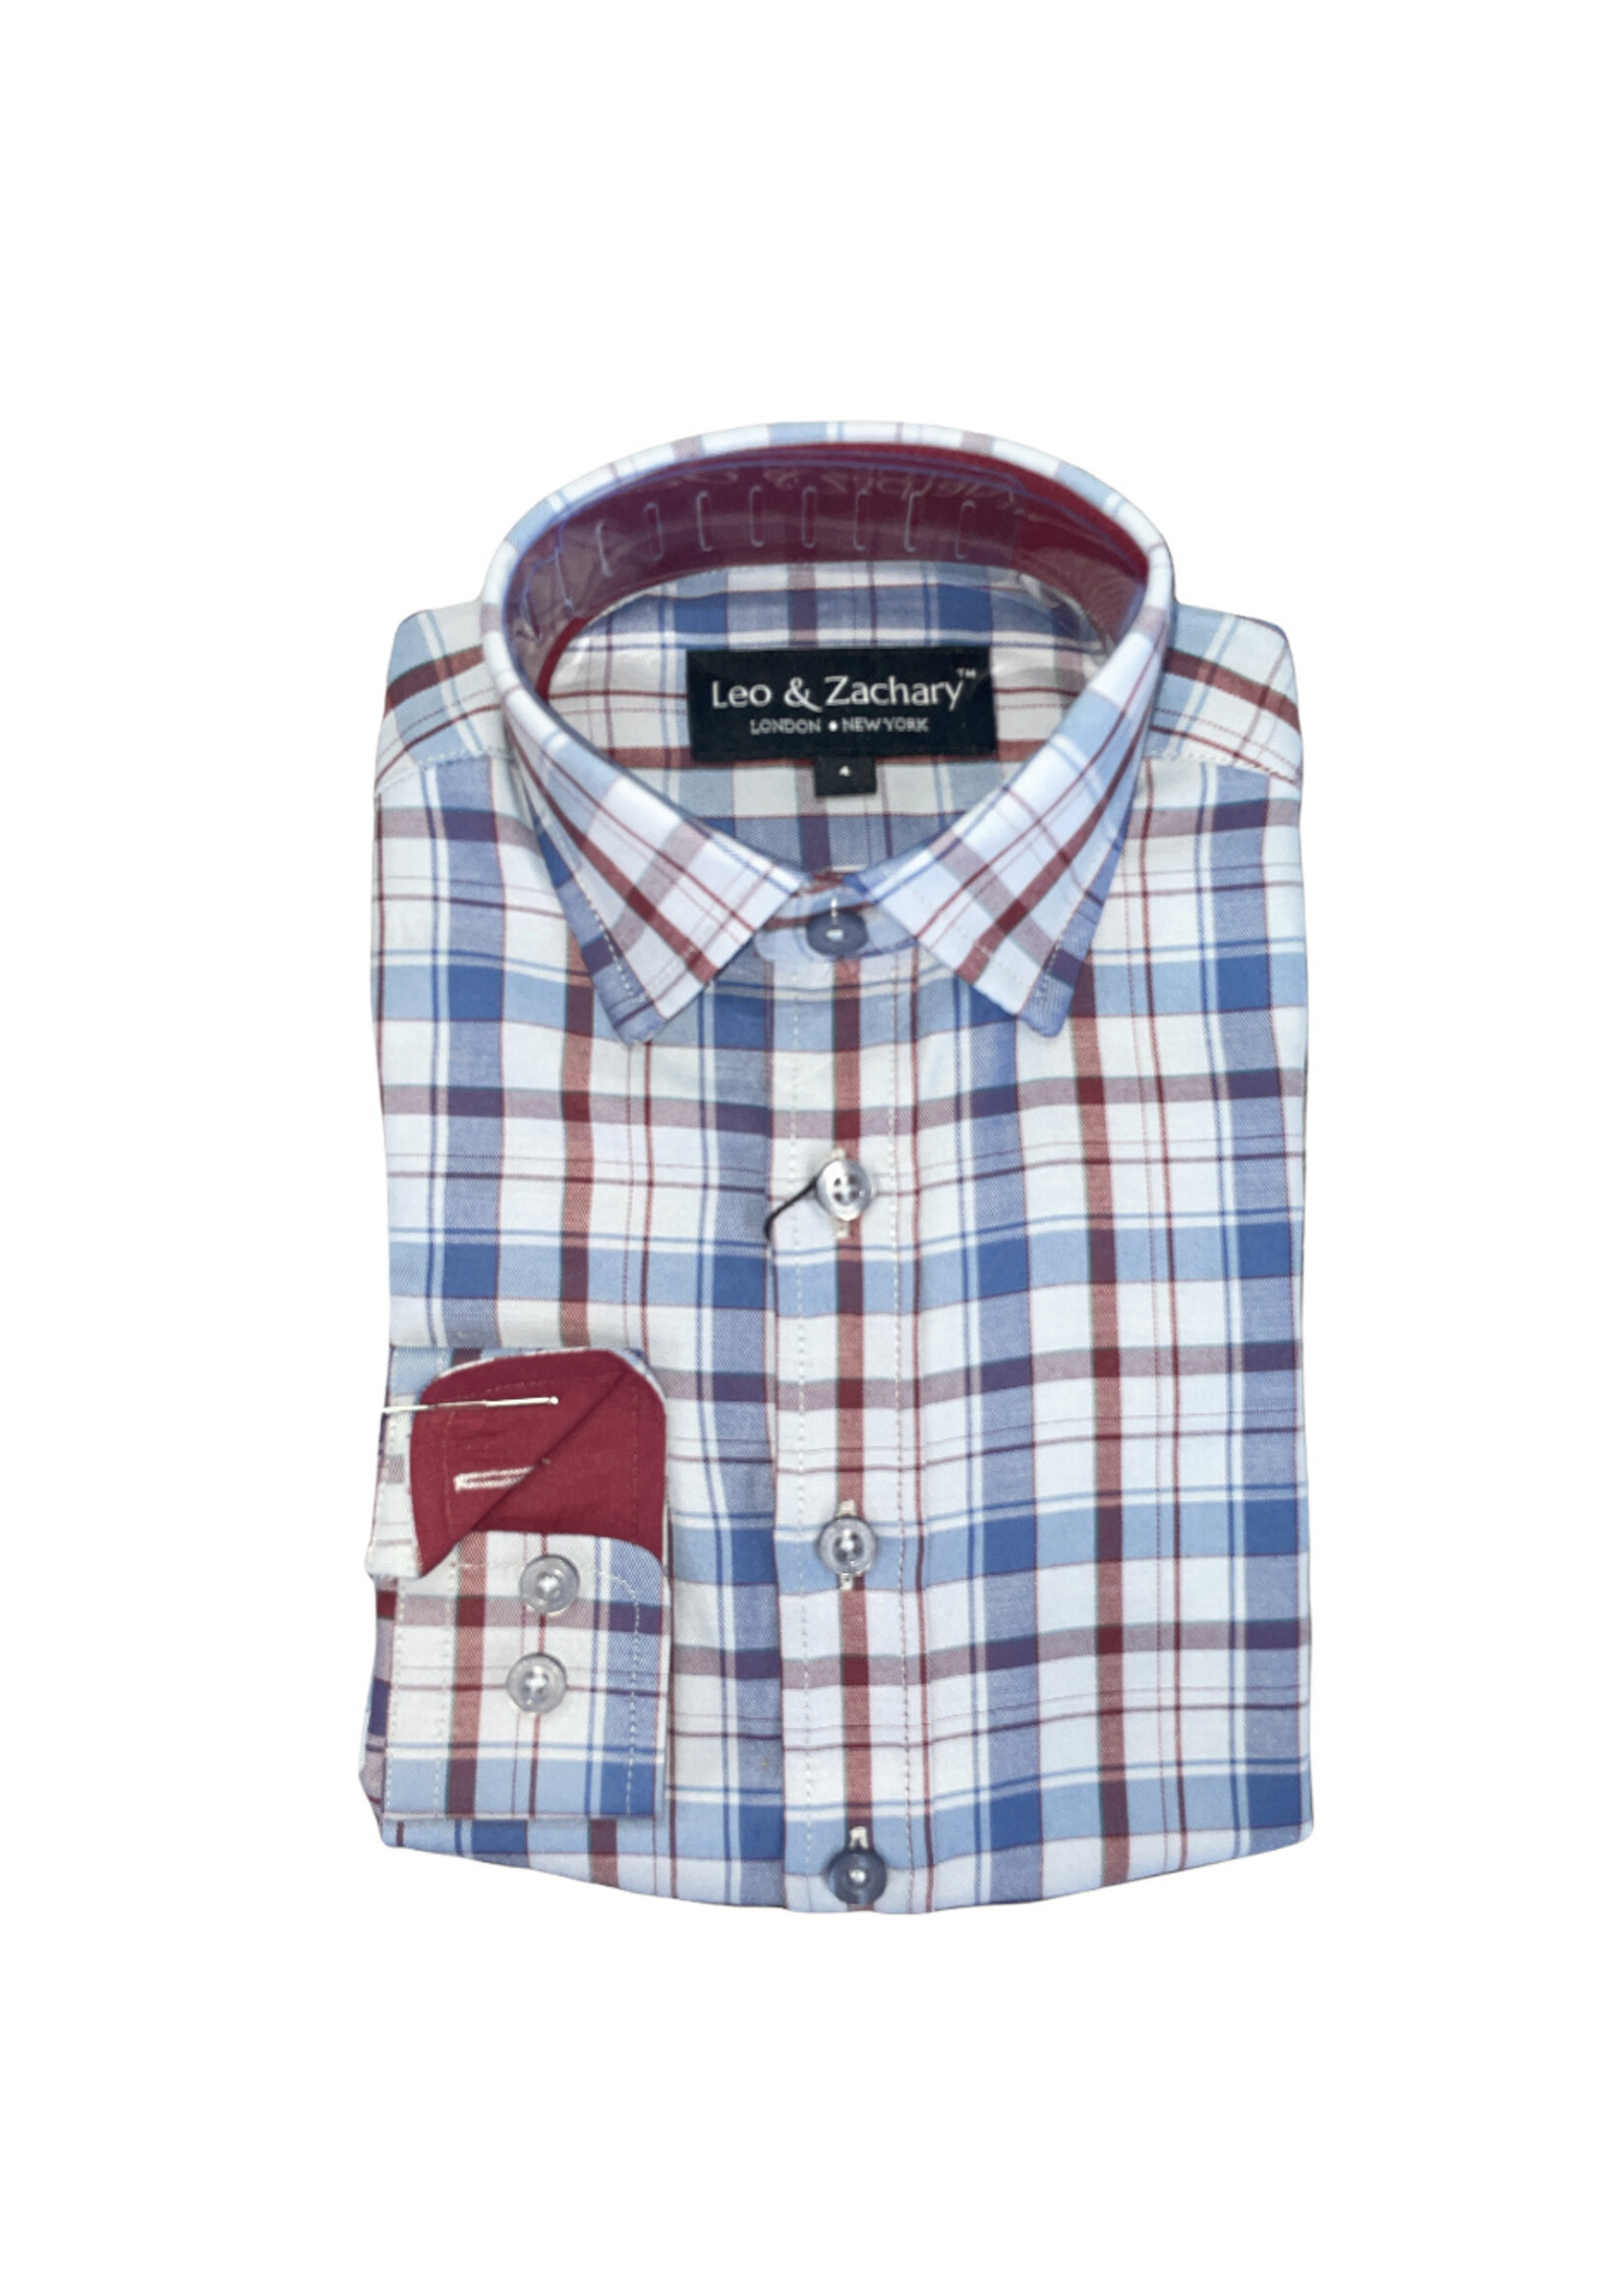 Leo & Zachary Grey/Stone/Deep Red Plaid L/S Shirt